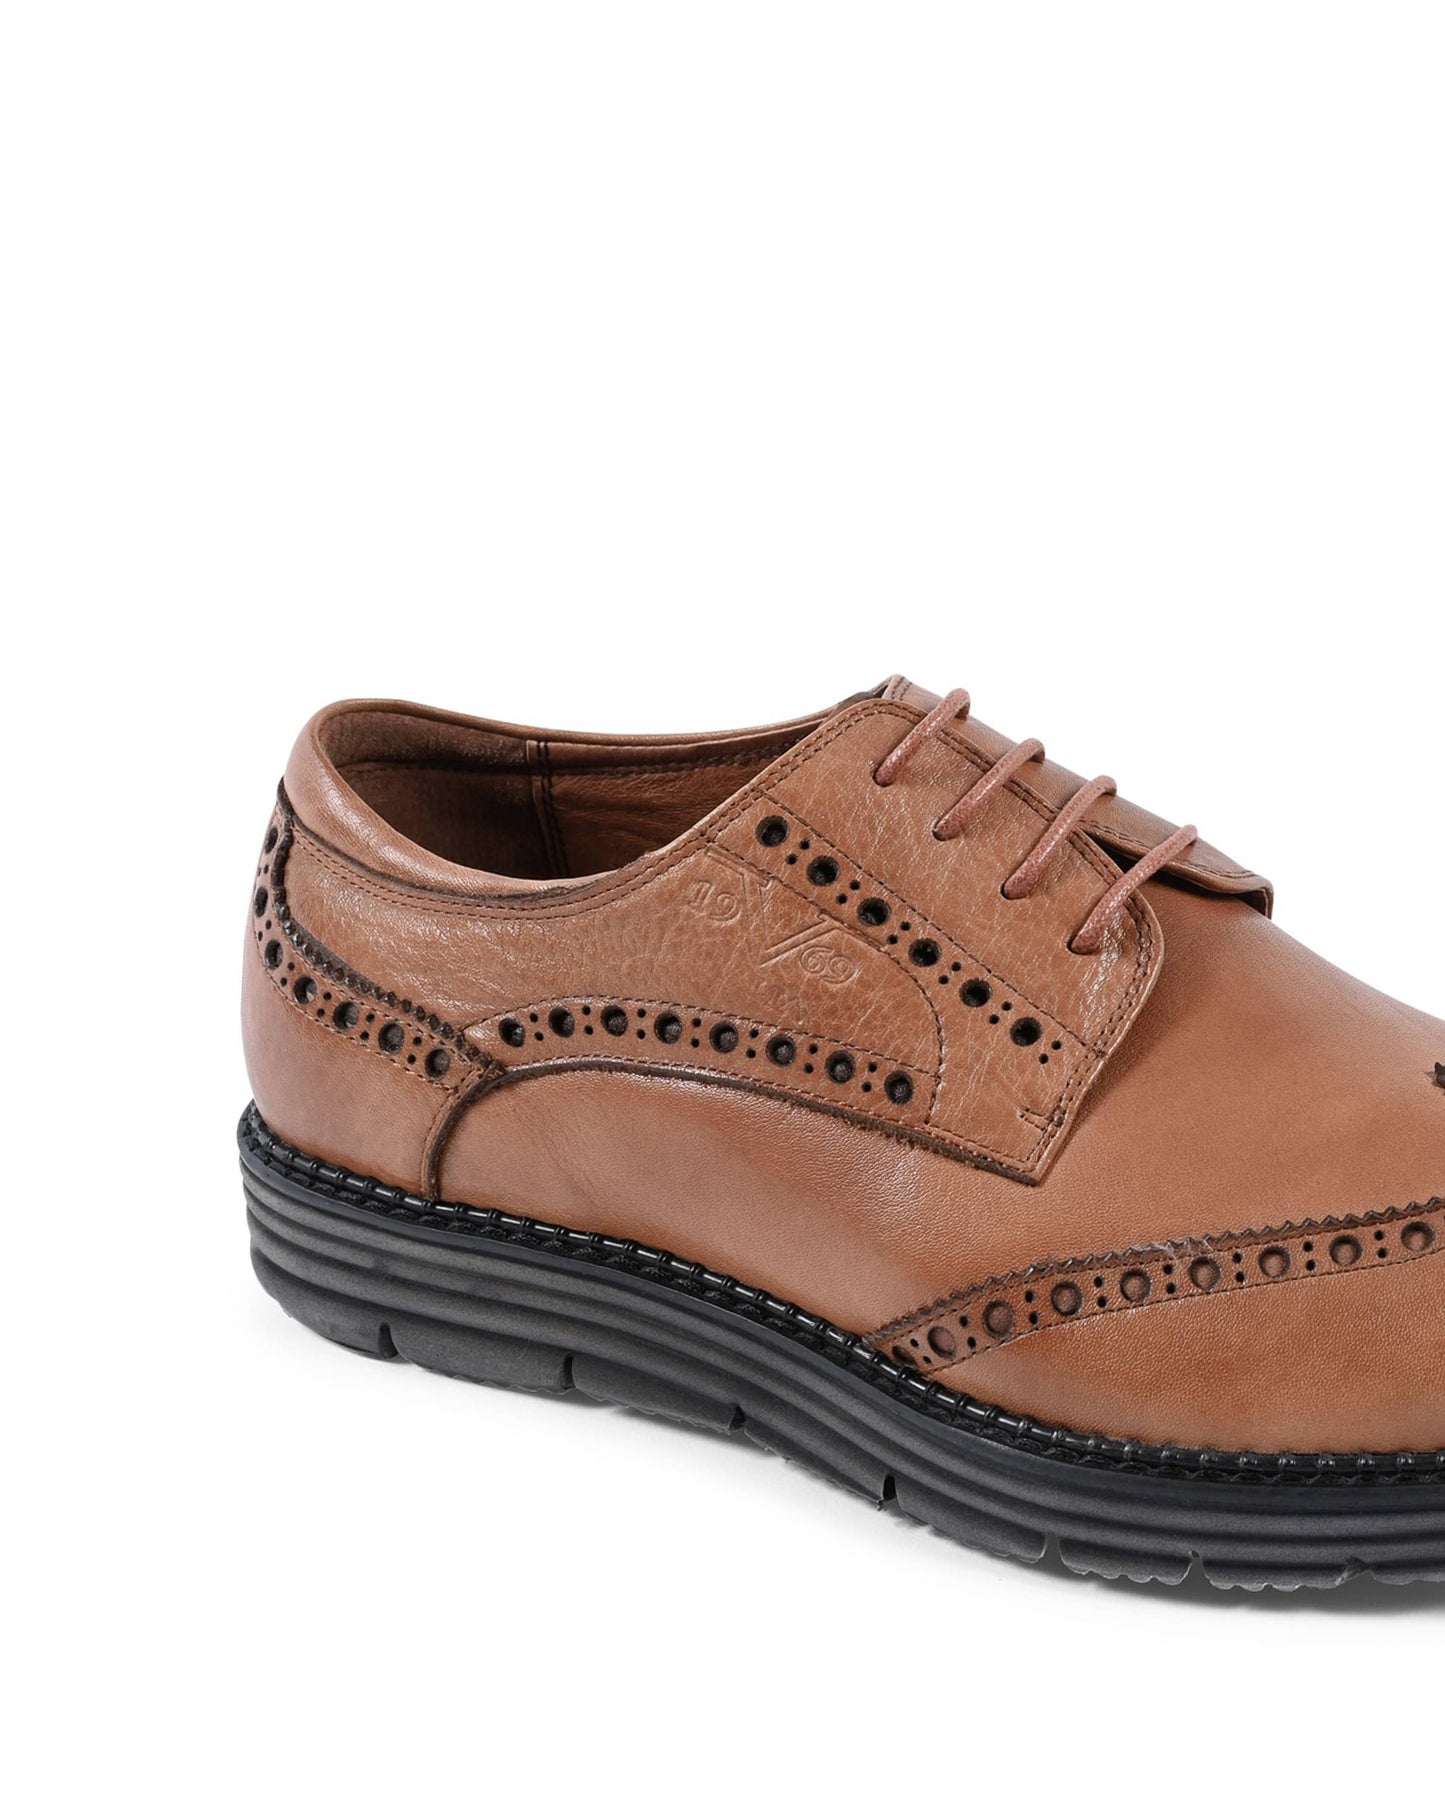 19V69 Italia Mens Lace Up Shoes Brown YO W3074-3 TABACCO